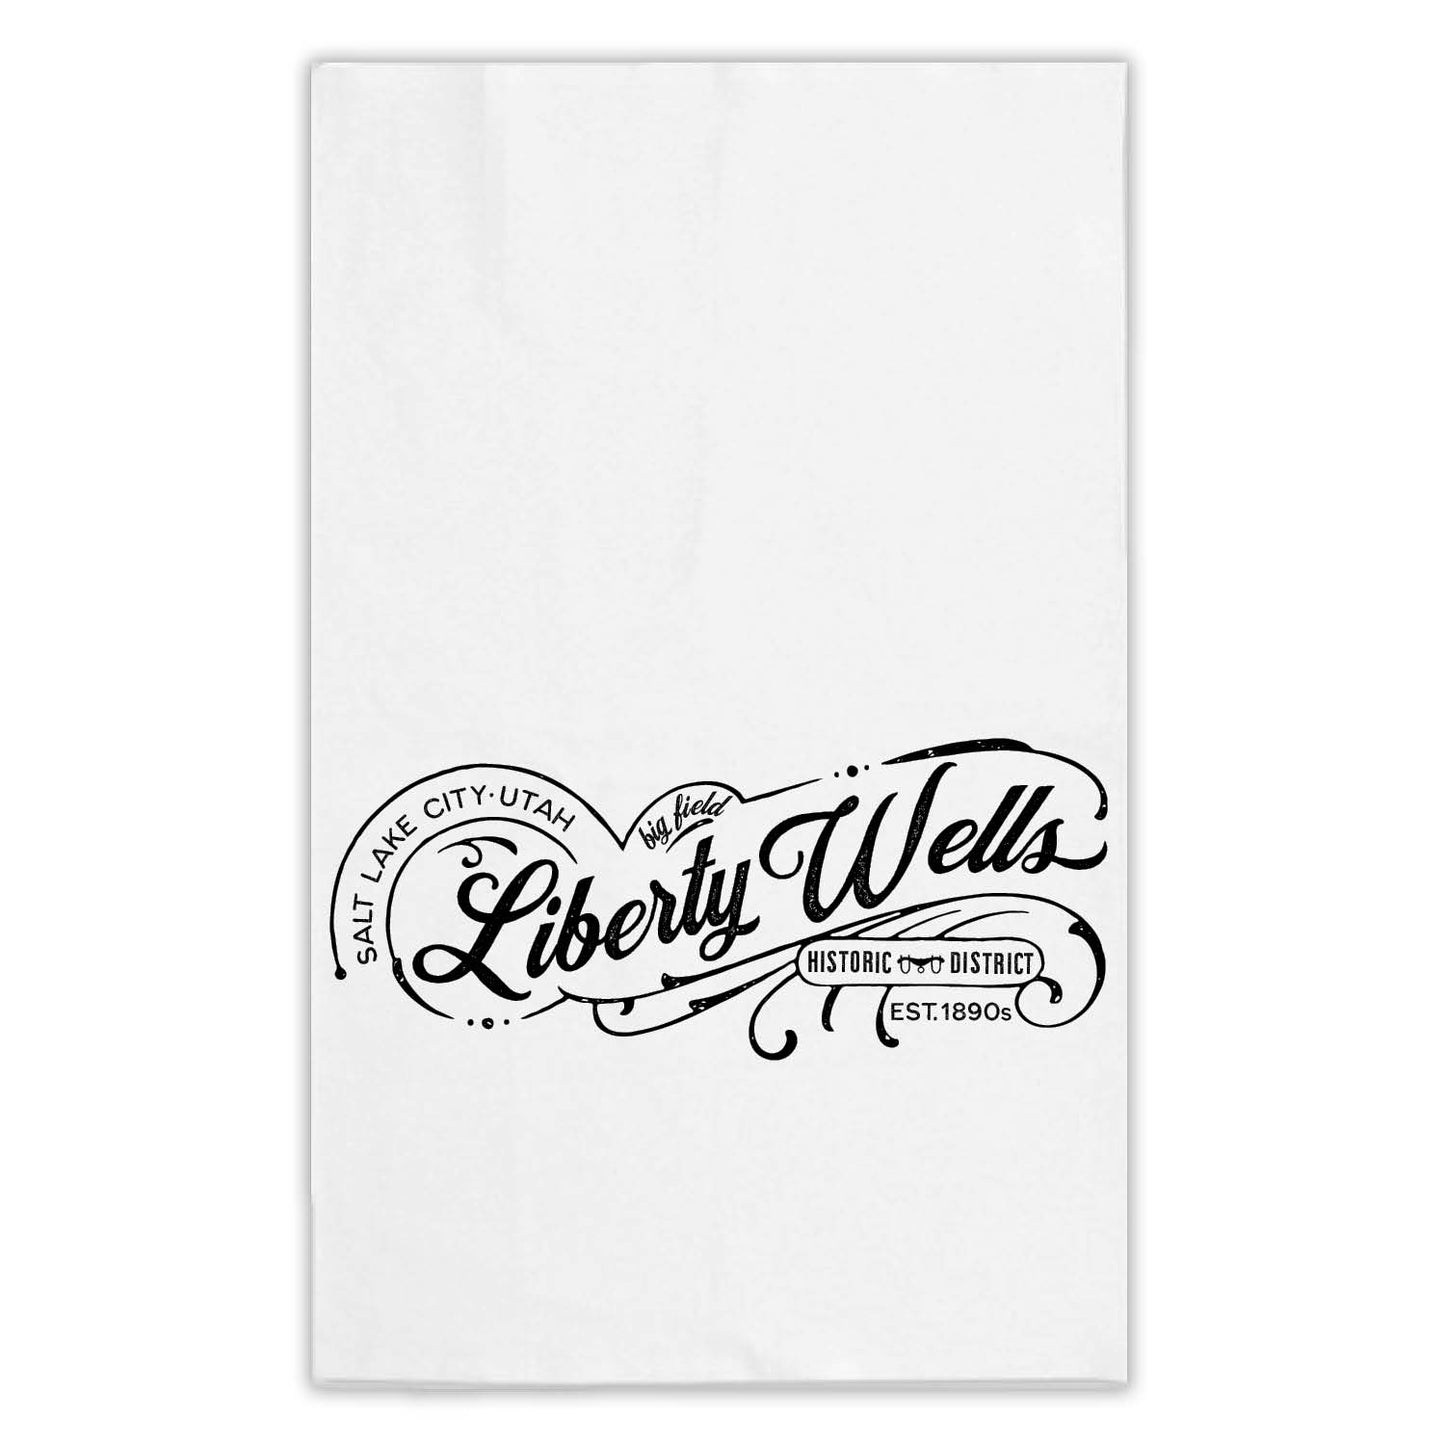 Liberty Wells Salt Lake City neighborhood swirly script design printed on a white tea towel